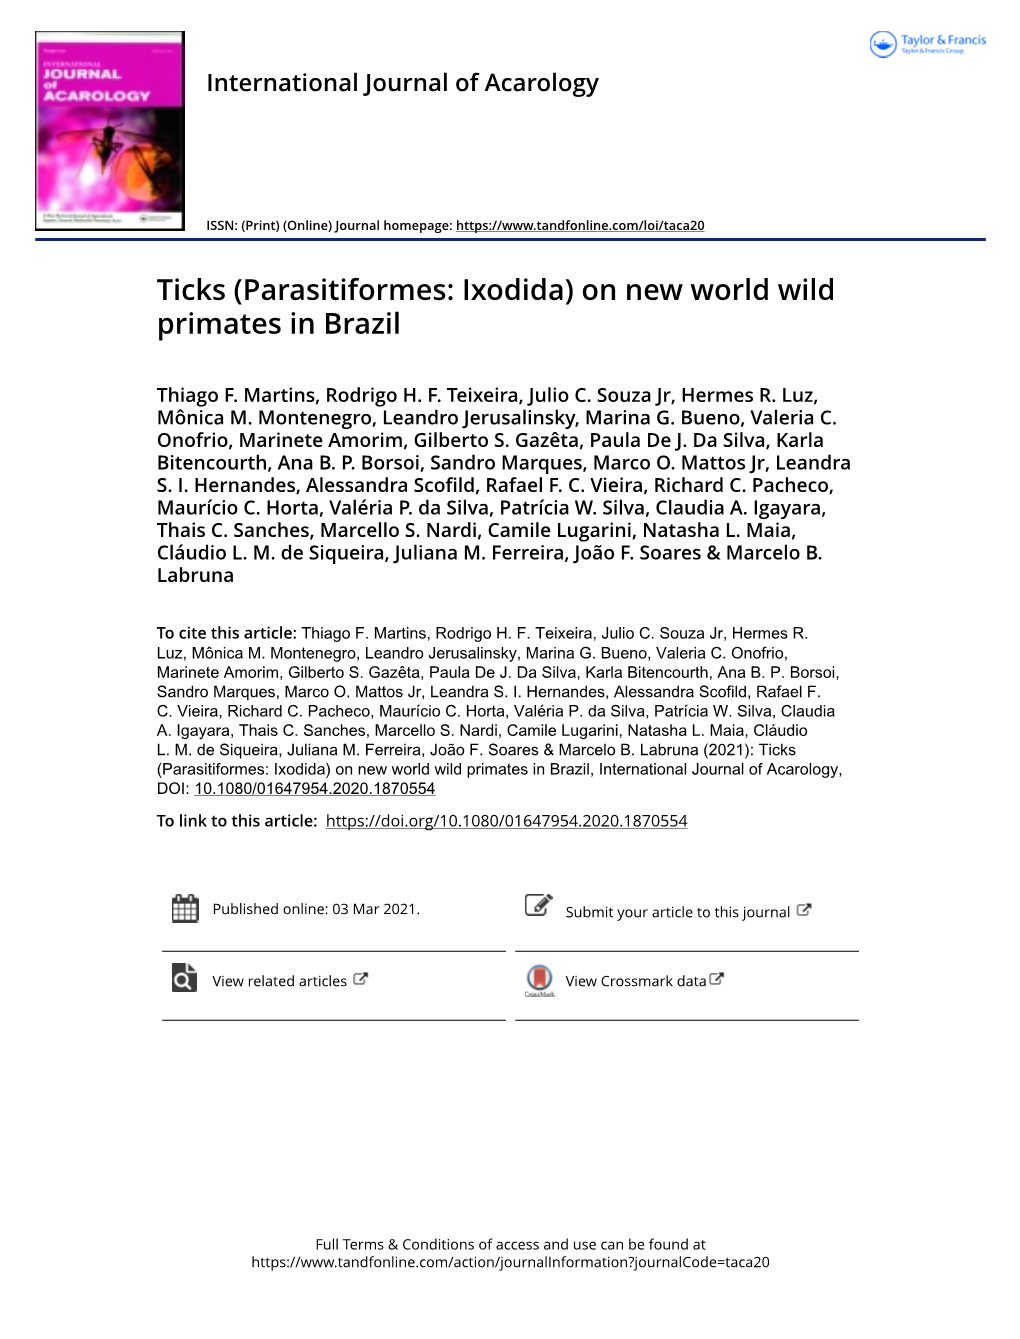 Ticks (Parasitiformes: Ixodida) on New World Wild Primates in Brazil